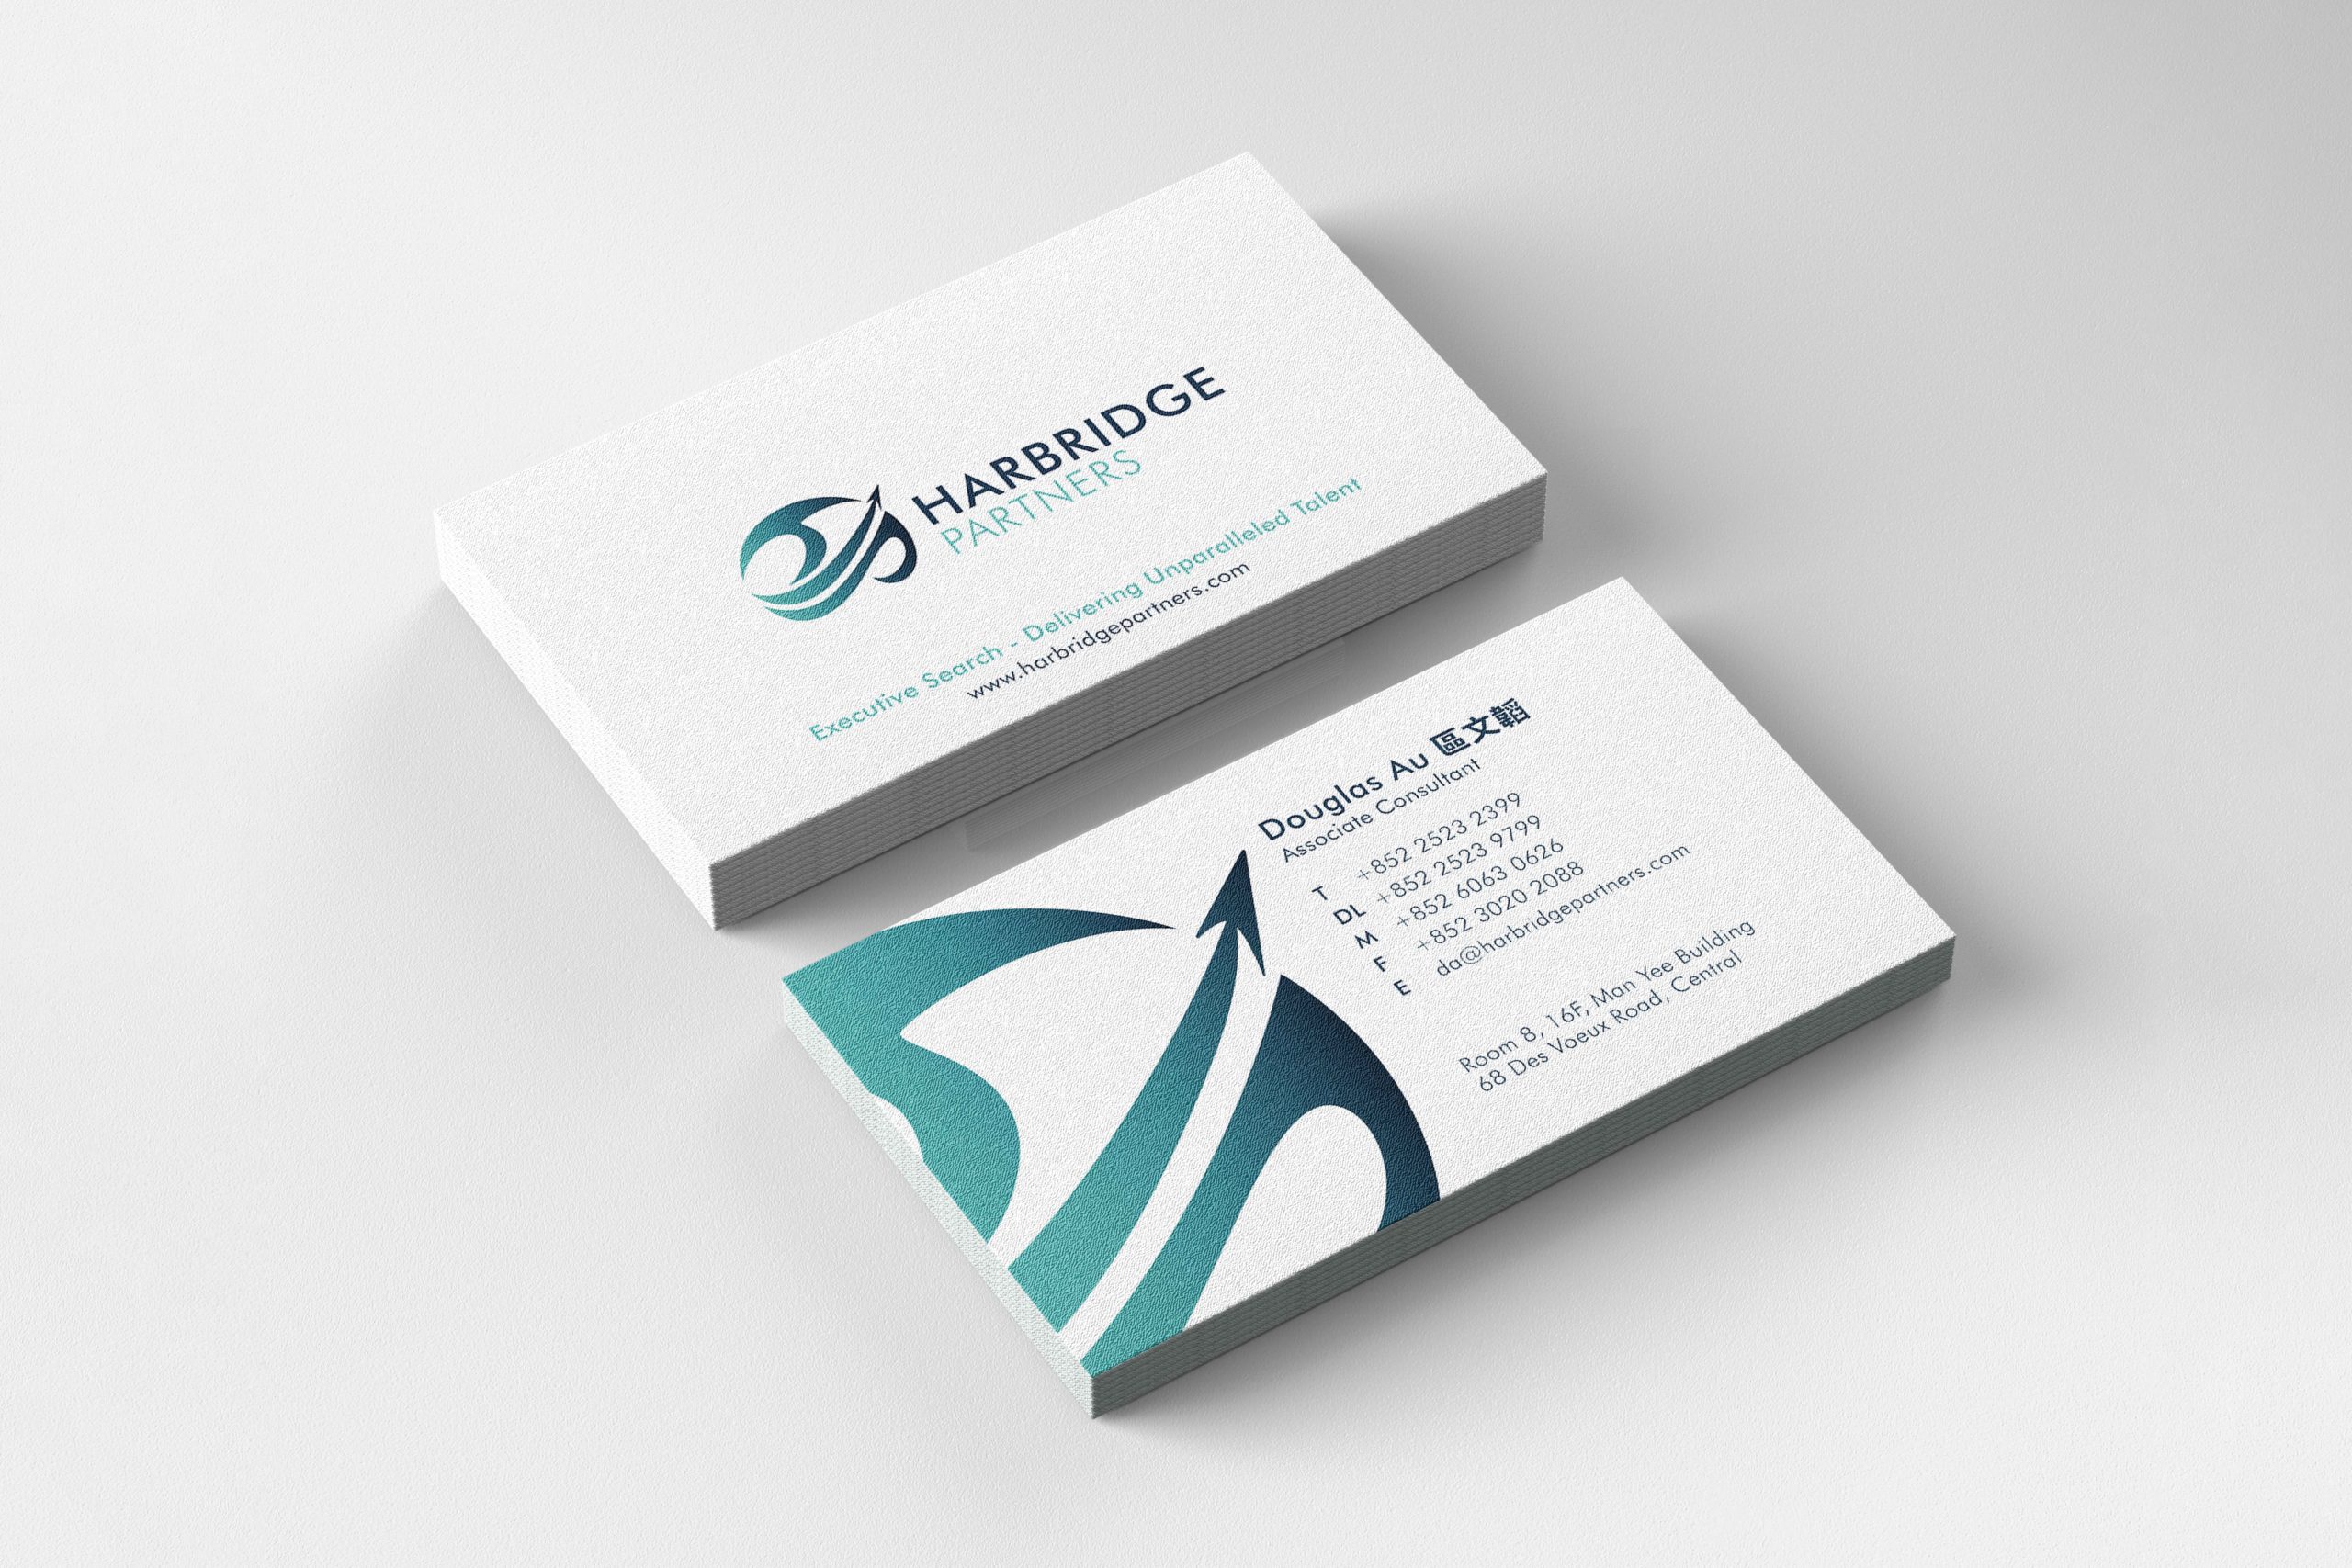 Harbridge Partners Business card design